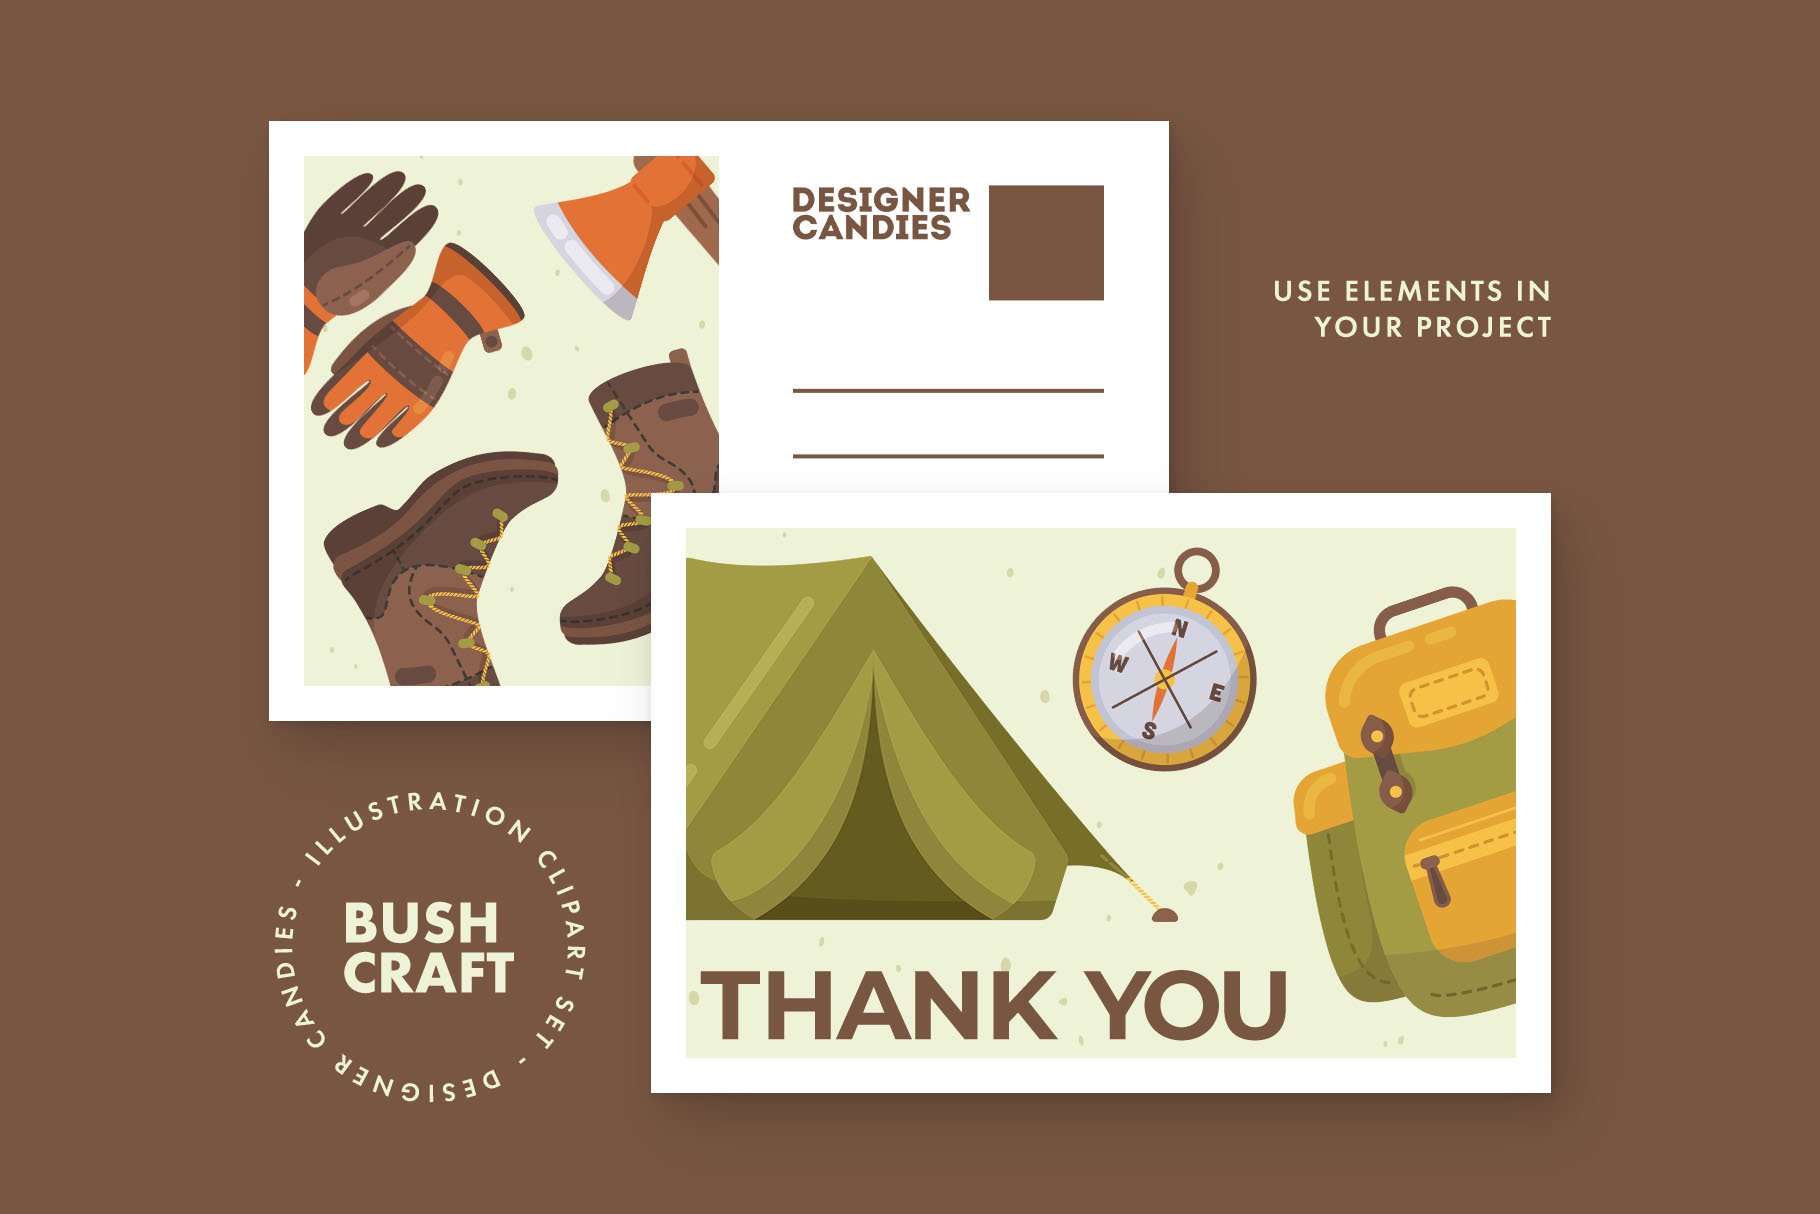 Bushcraft Kit Illustration Set - Design Cuts